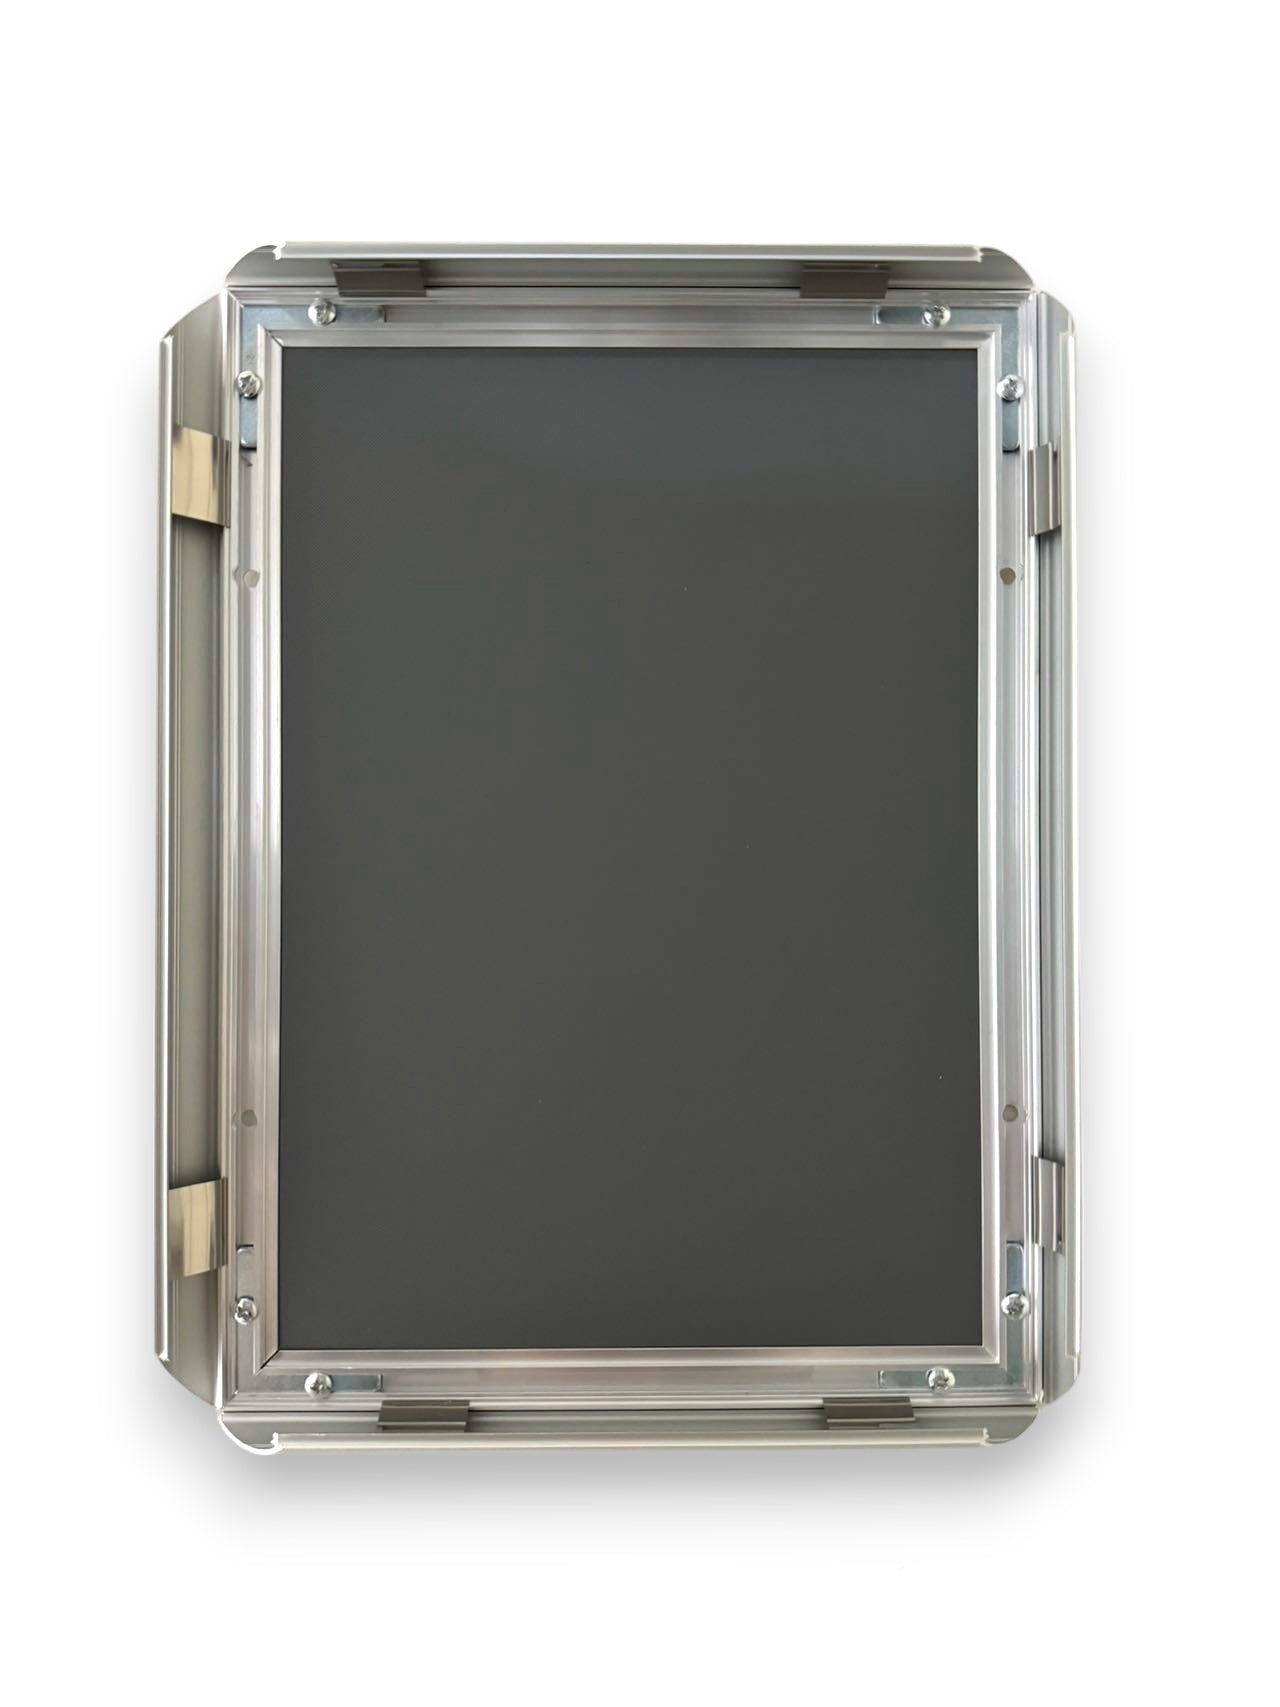 A1 Snap Lock Frame Silver 25mm Profiles Wall mount - BIZ DISPLAY ELITE